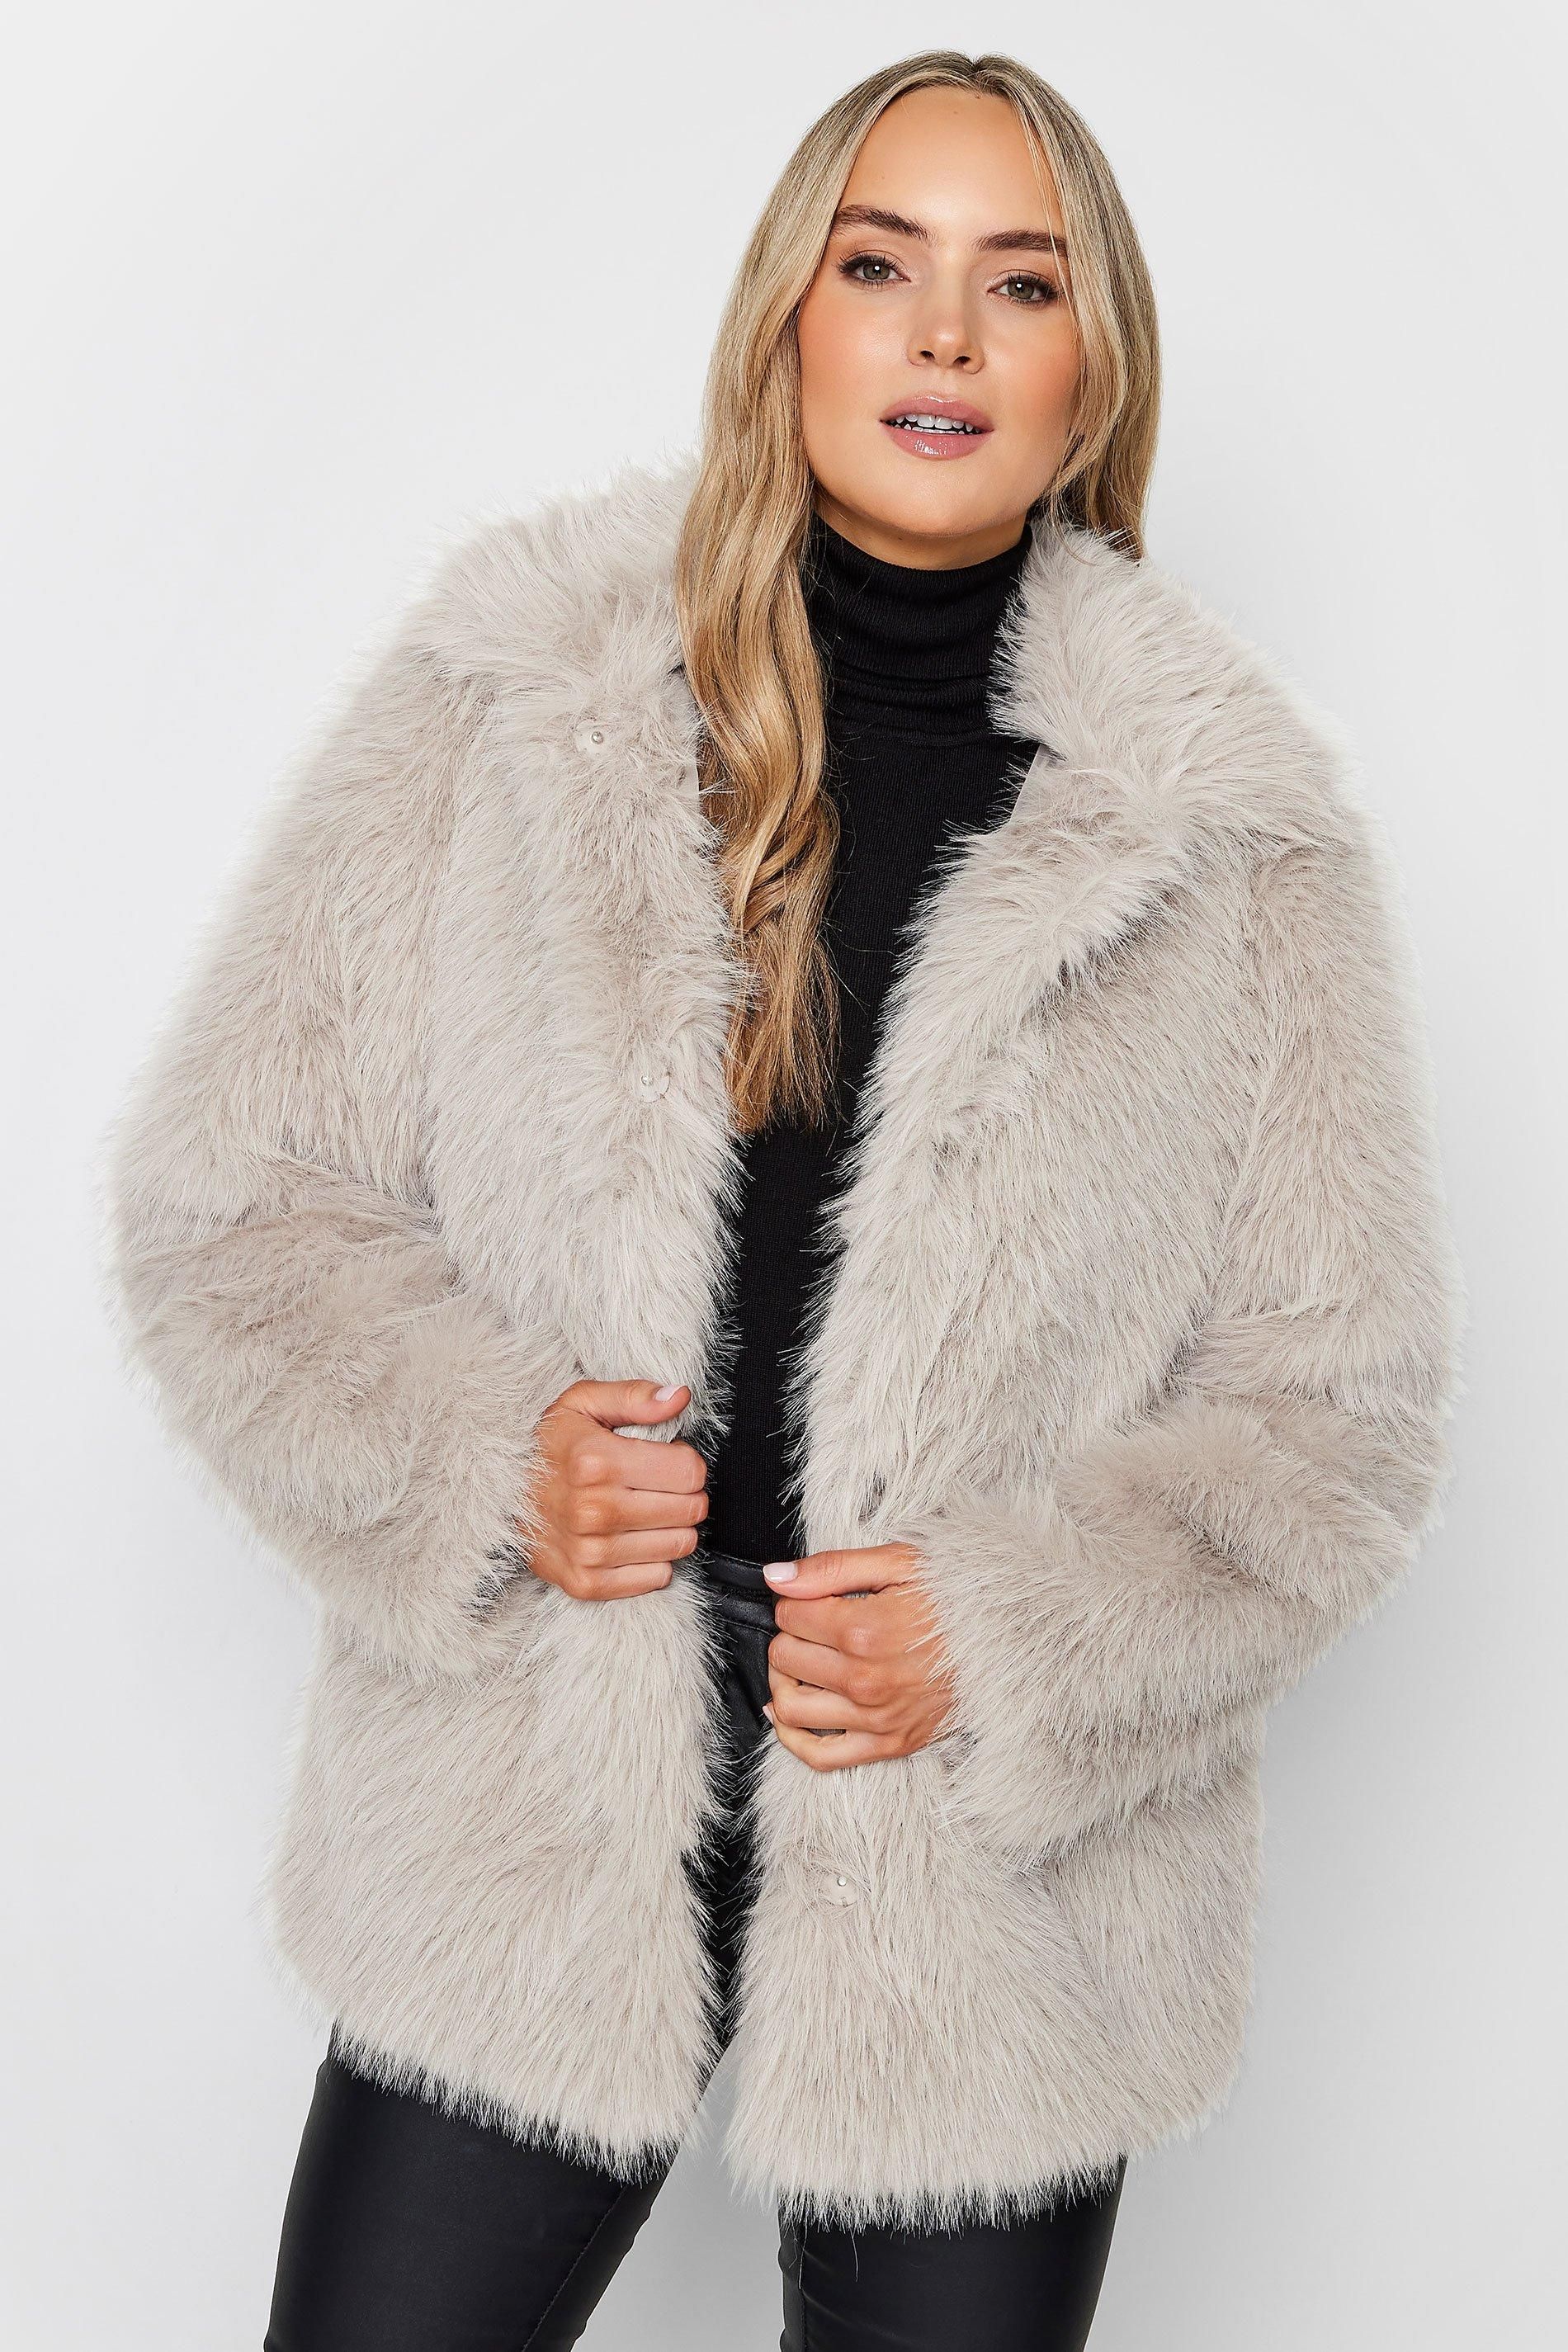 Jackets & Coats | Tall Faux Fur Coat | Long Tall Sally | Debenhams UK